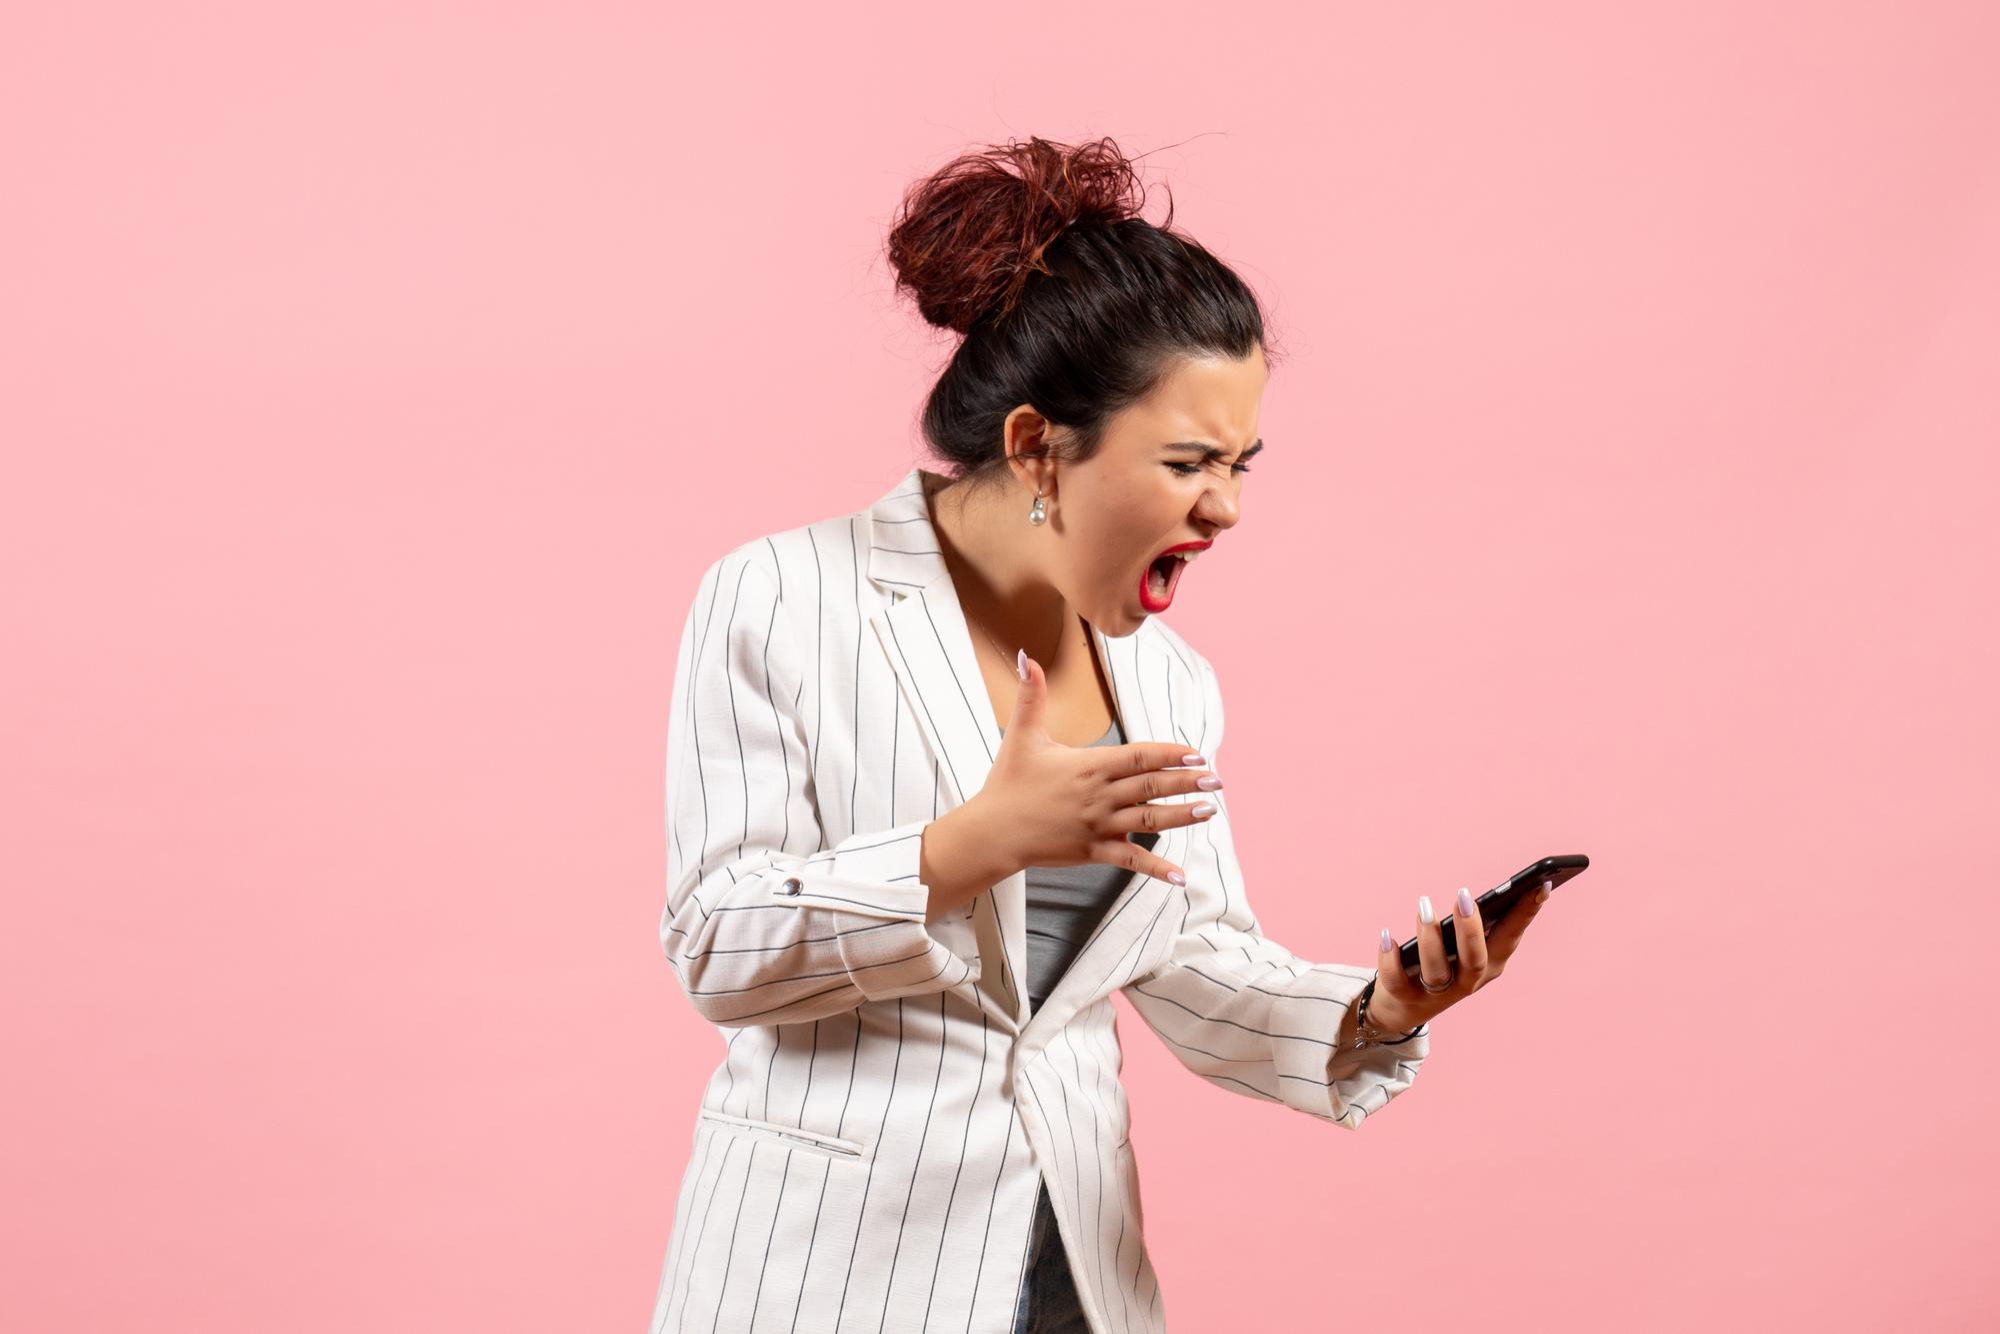 An upset woman reacting badly to something on a phone | Source: Freepik